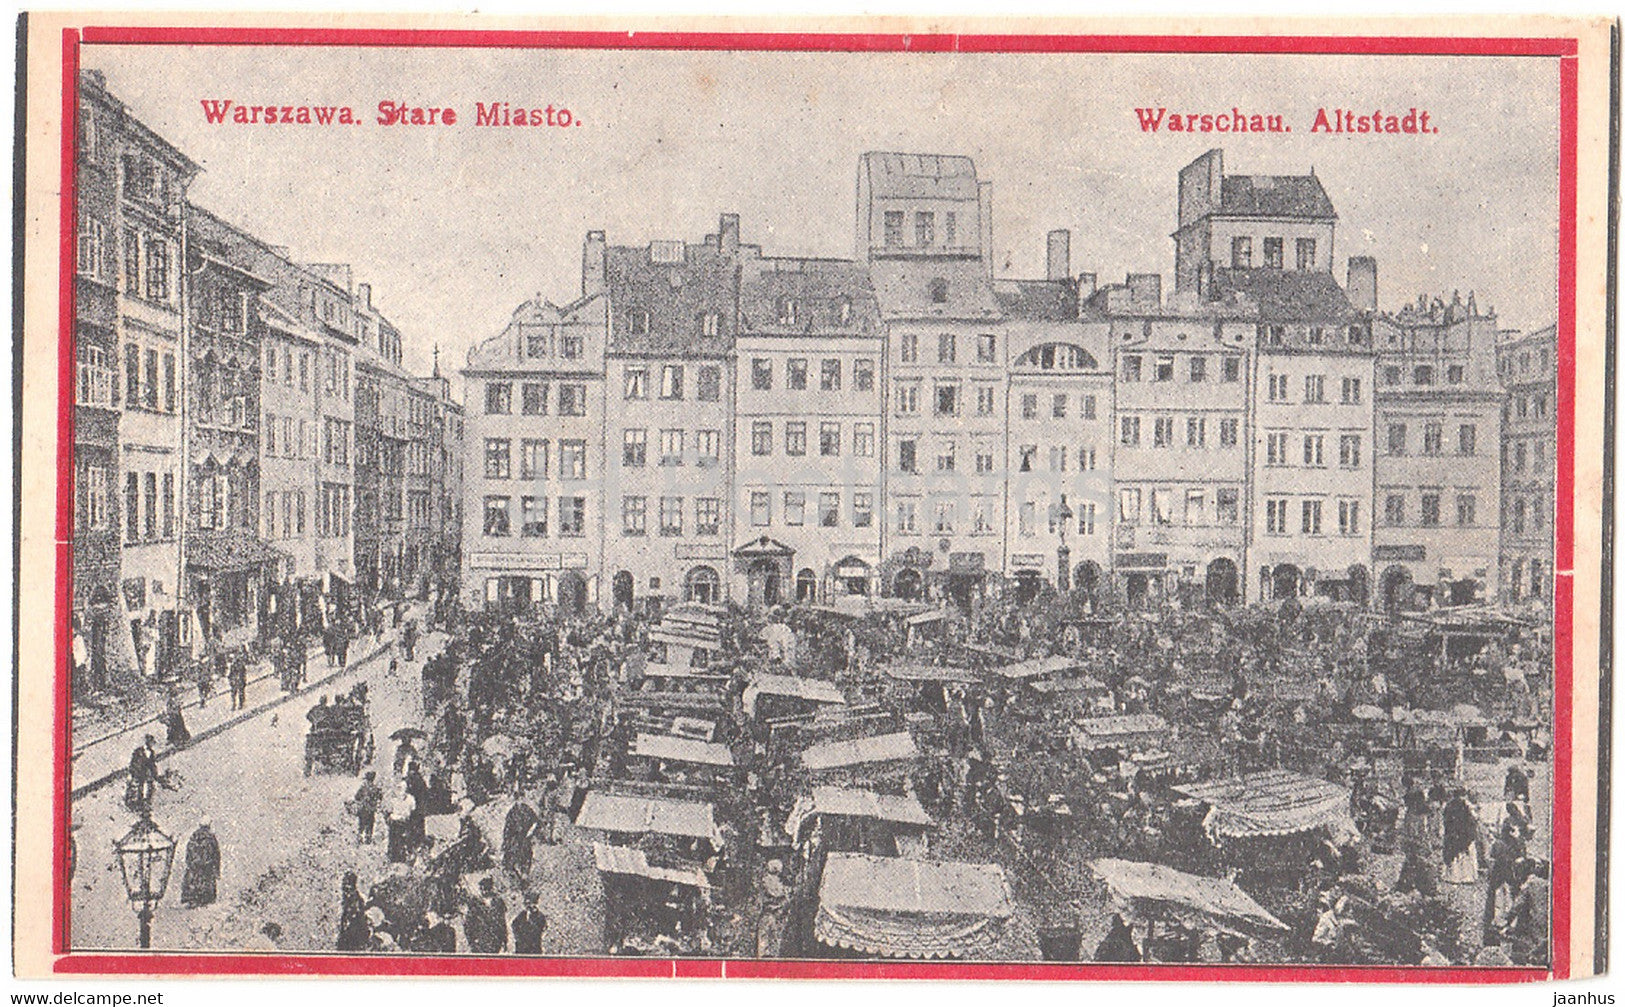 Warszawa - Stare Miasto - Warschau Altstadt - Feldpost - old postcard - 1916 - Poland - used - JH Postcards